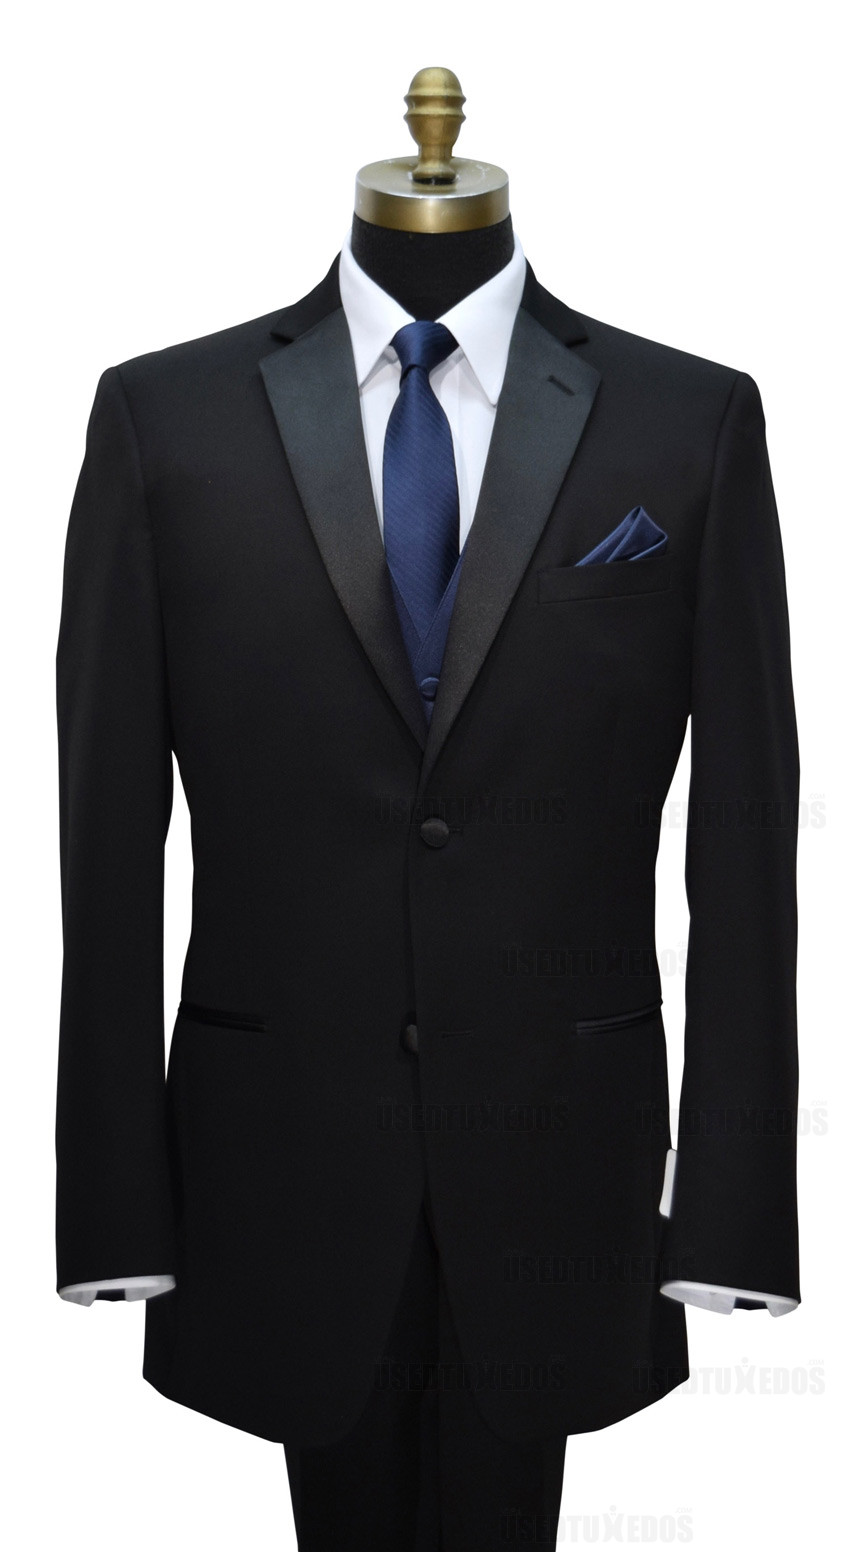 navy blue skinny dress tie with navy blue vest and black tuxedo